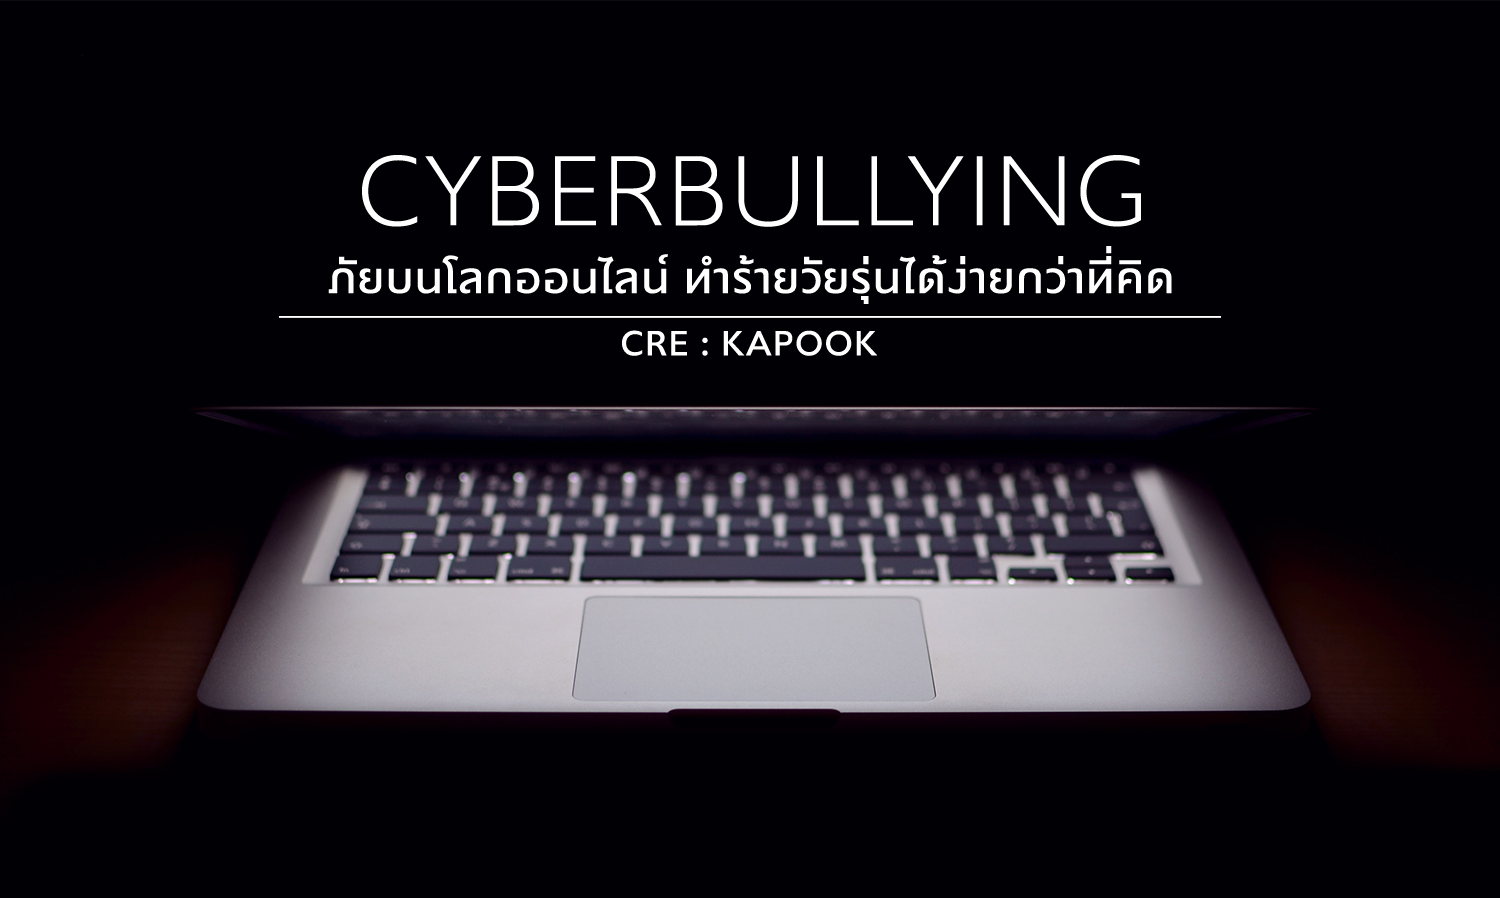 Cyberbullying ภัยบนโลกออนไลน์ ทำร้ายวัยรุ่นได้ง่ายกว่าที่คิด